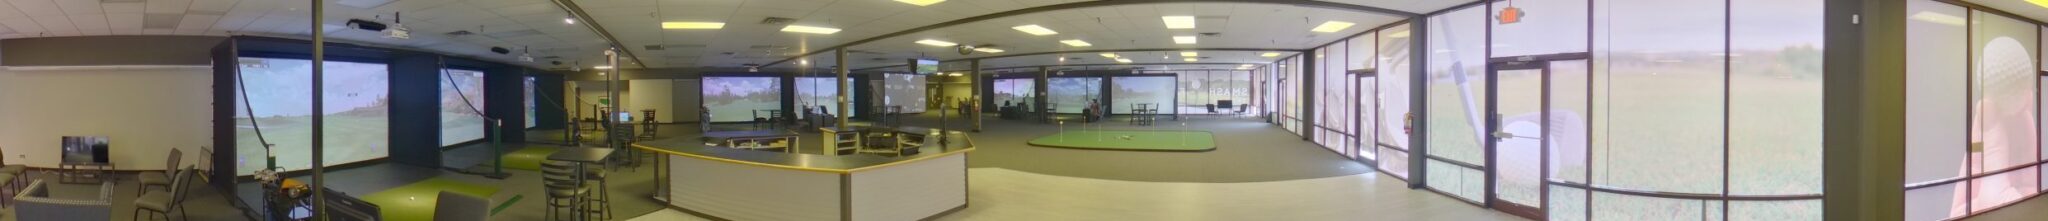 Google 360 Photo | Indoor Golf